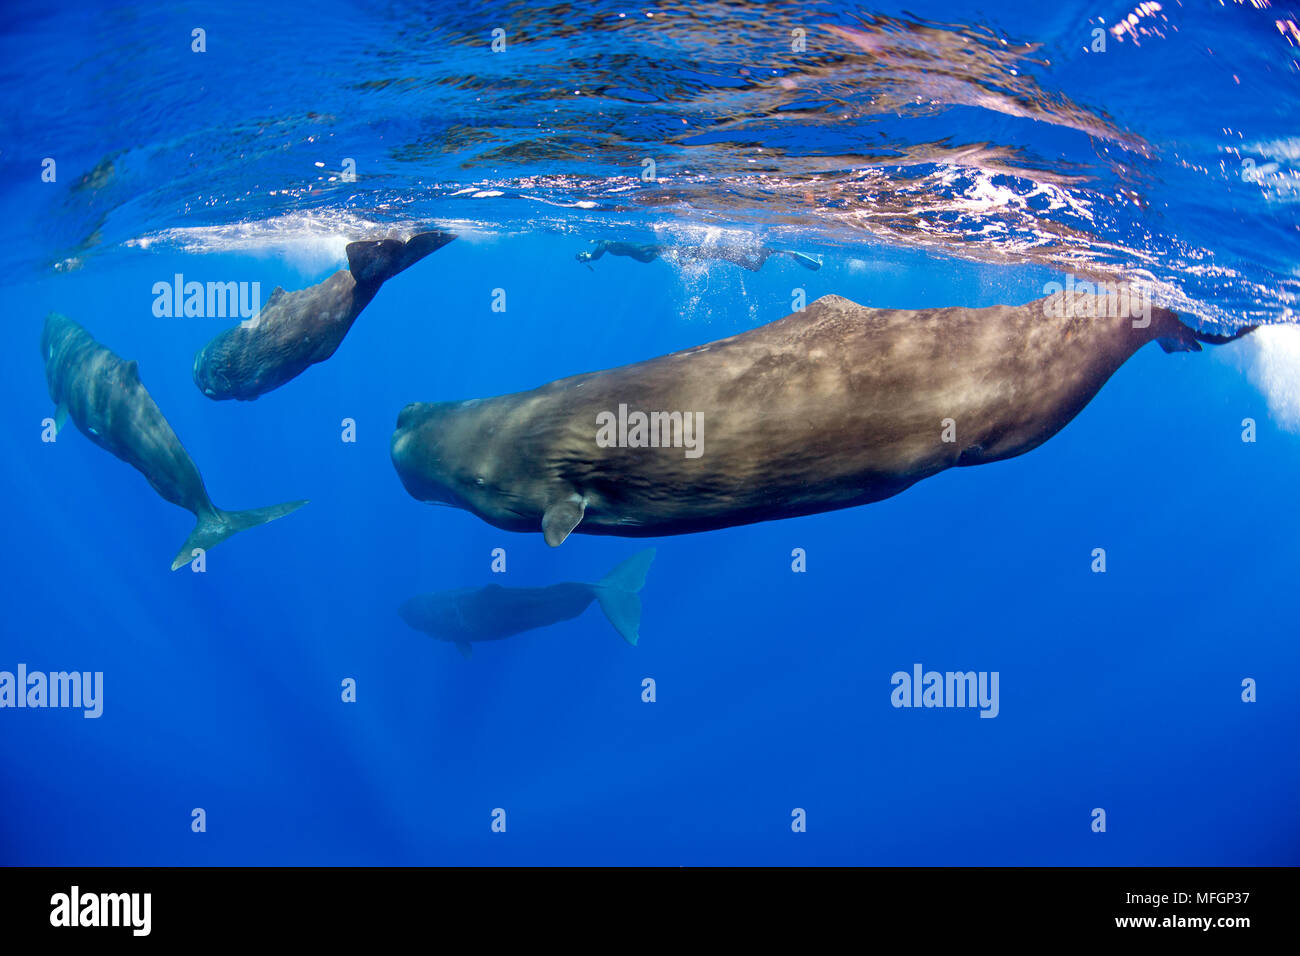 Pod of sperm whale, Physeter macrocephalus, Vulnerable (IUCN), Dominica, Caribbean Sea, Atlantic Ocean.  Photo taken under permit. Stock Photo